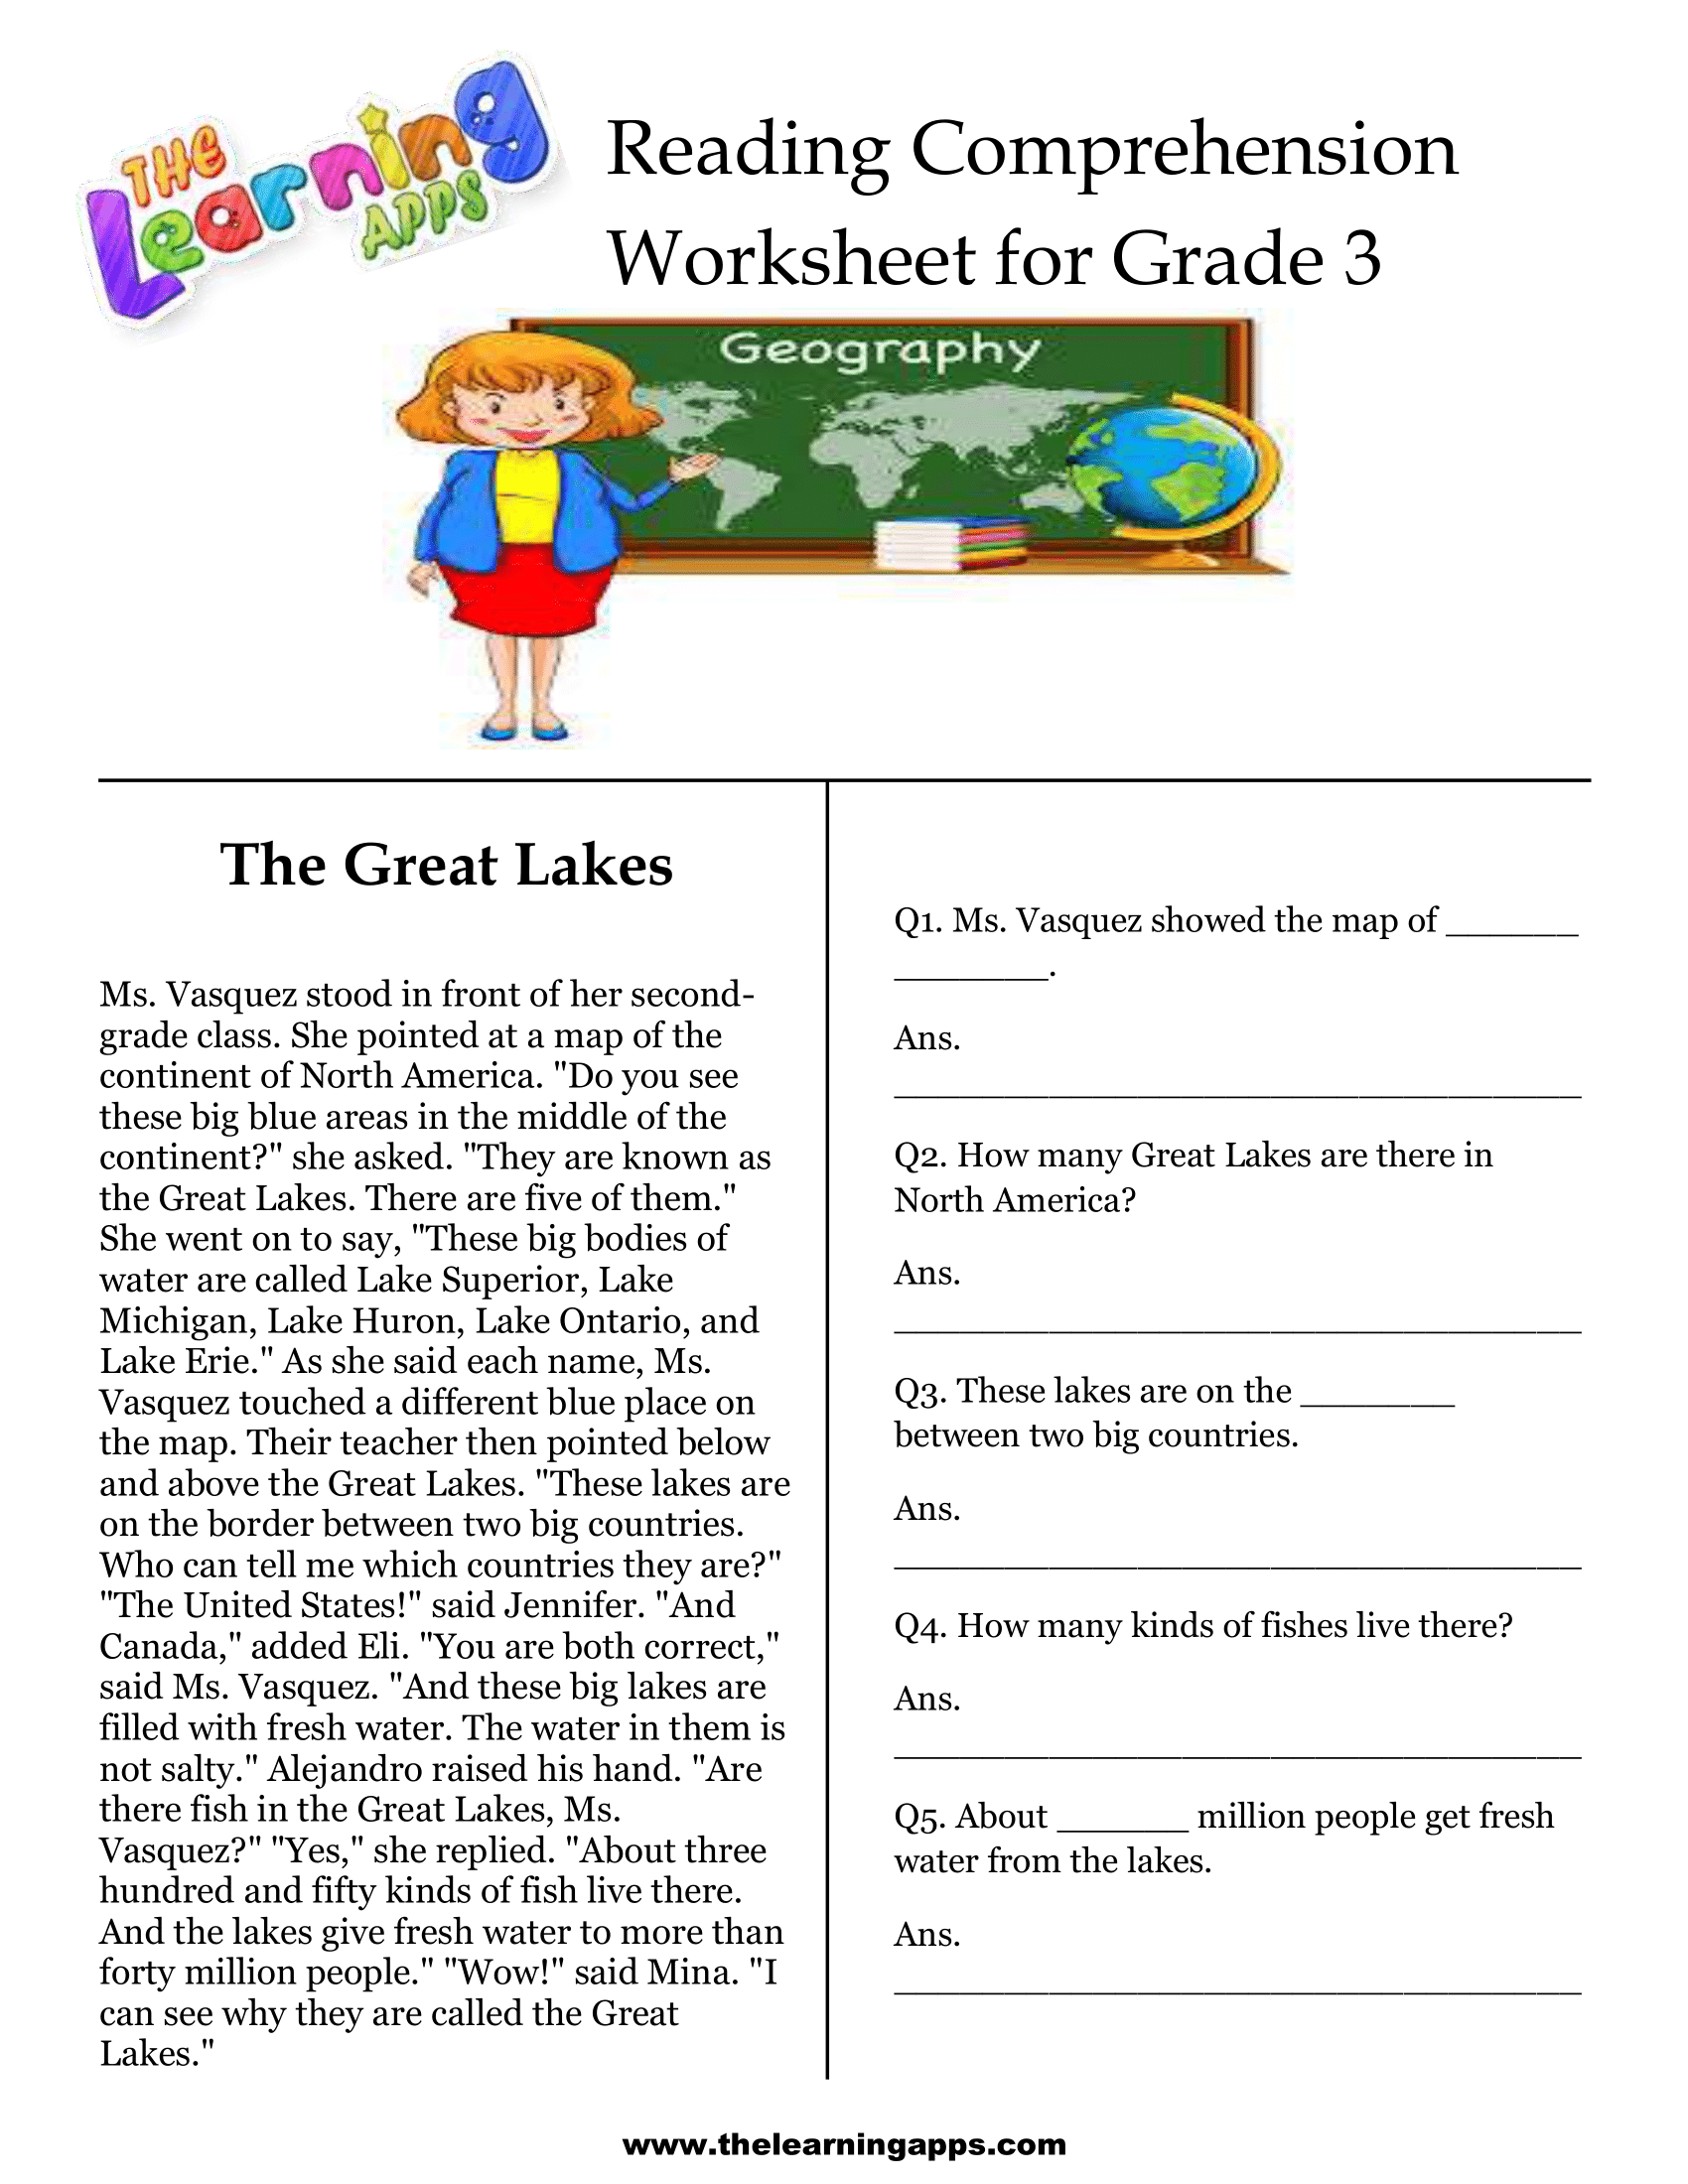 Reading Worksheets Printable For For 3Rd Grade